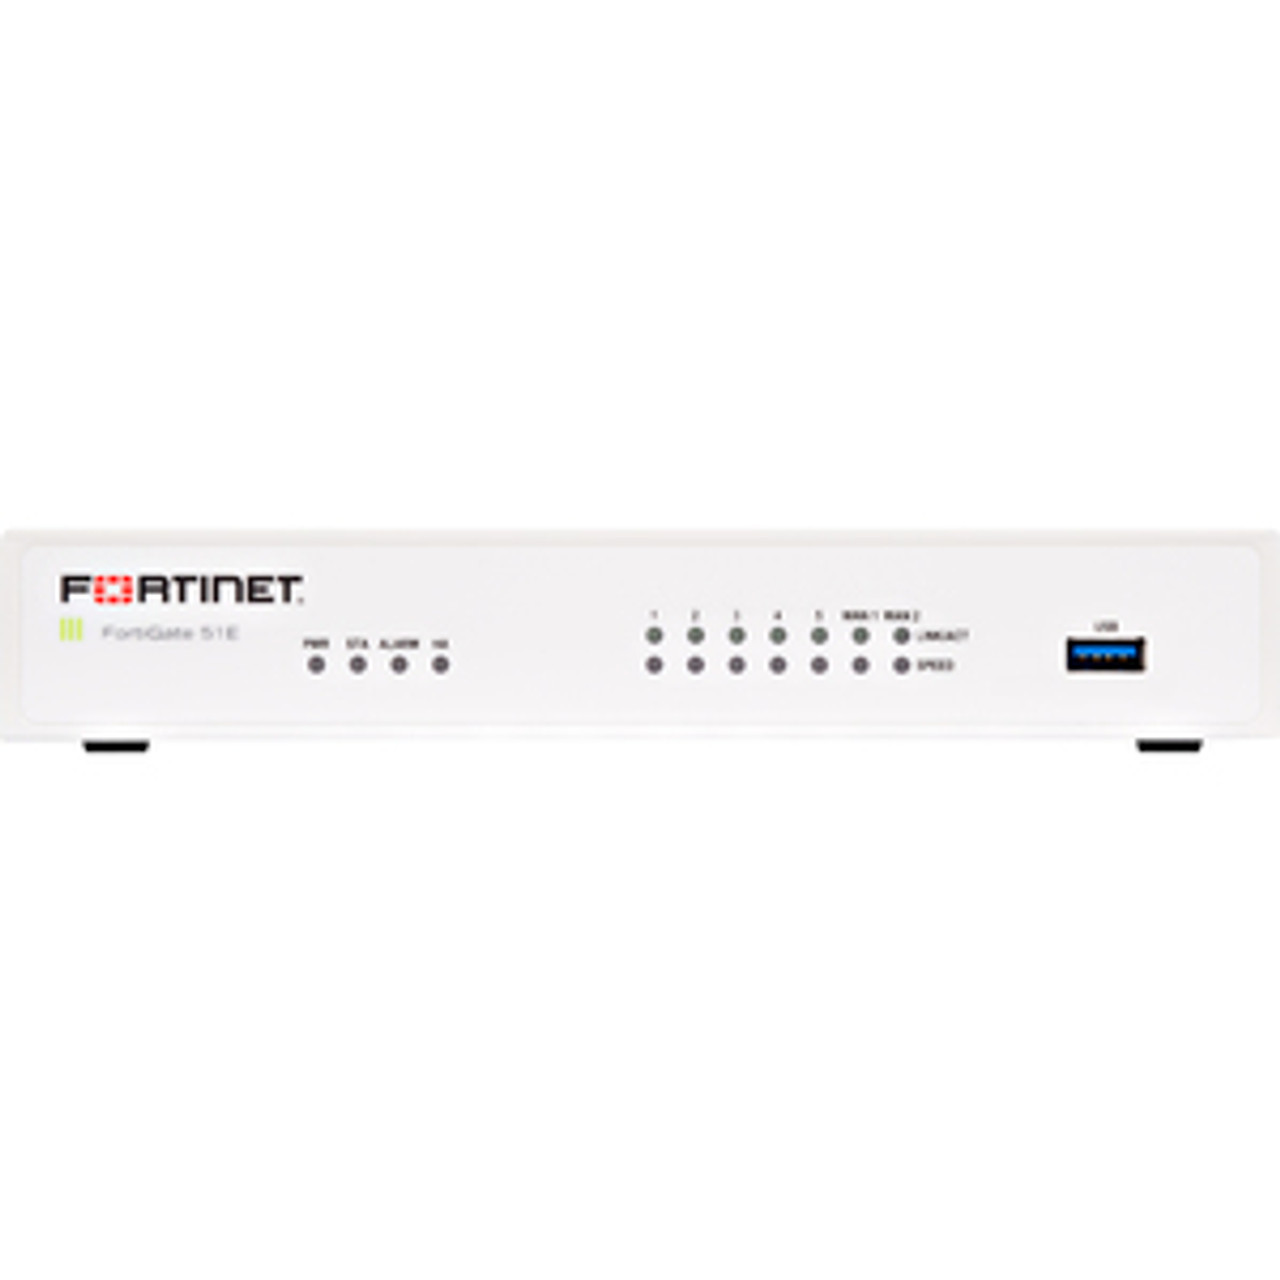 Fortinet FortiGate 51E Network Security/Firewall Appliance - 7 Port - 1000Base-T - Gigabit Ethernet - AES (256-bit), SHA-256, AES (128-bit) - 7 x RJ-45 - Rack-mountable, Desktop & FG BNDL